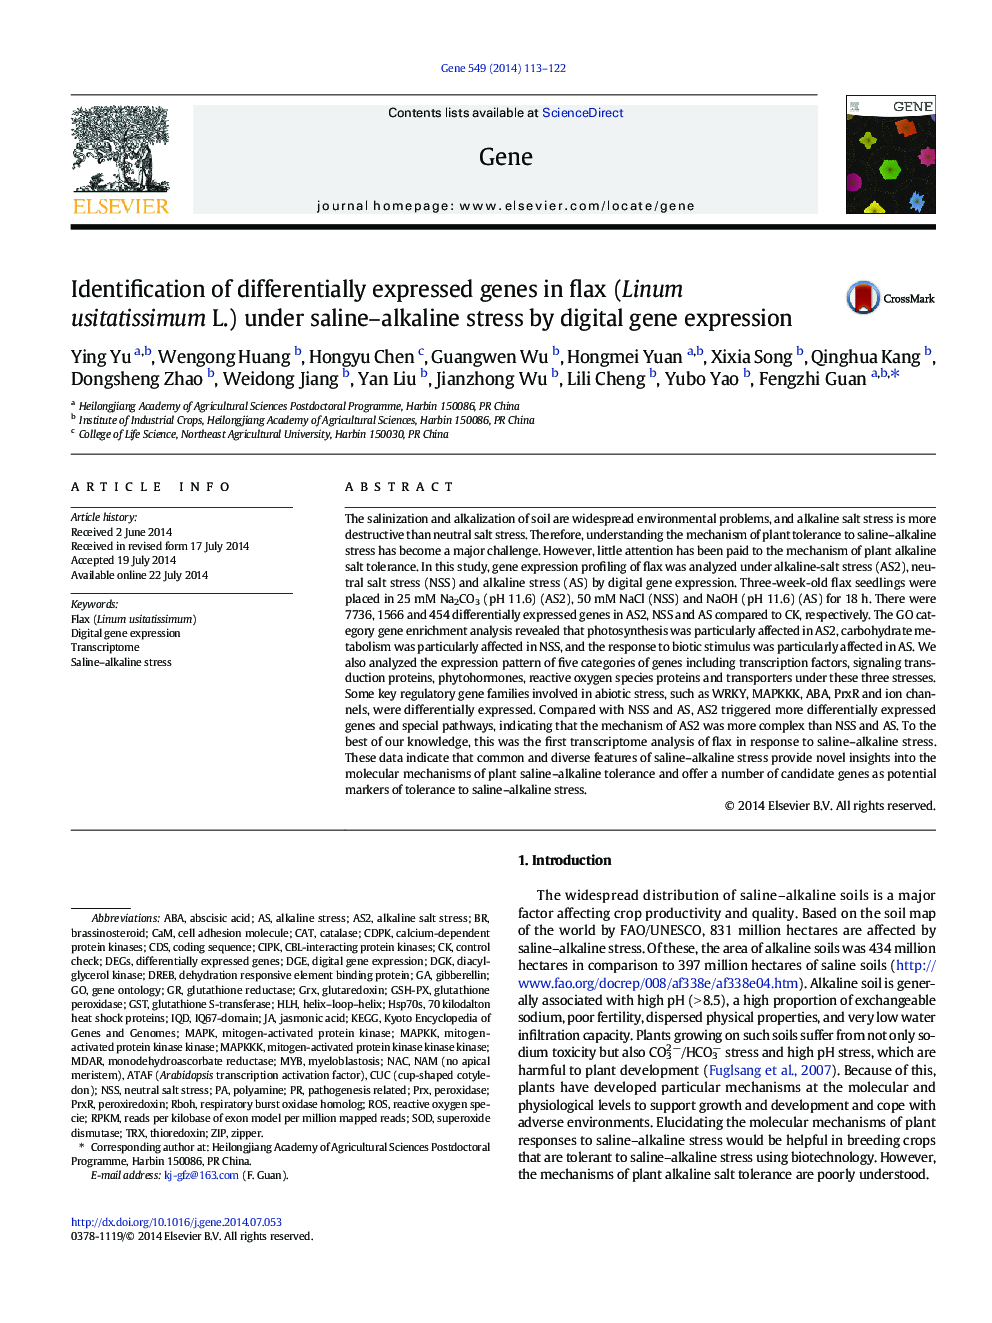 Identification of differentially expressed genes in flax (Linum usitatissimum L.) under saline–alkaline stress by digital gene expression